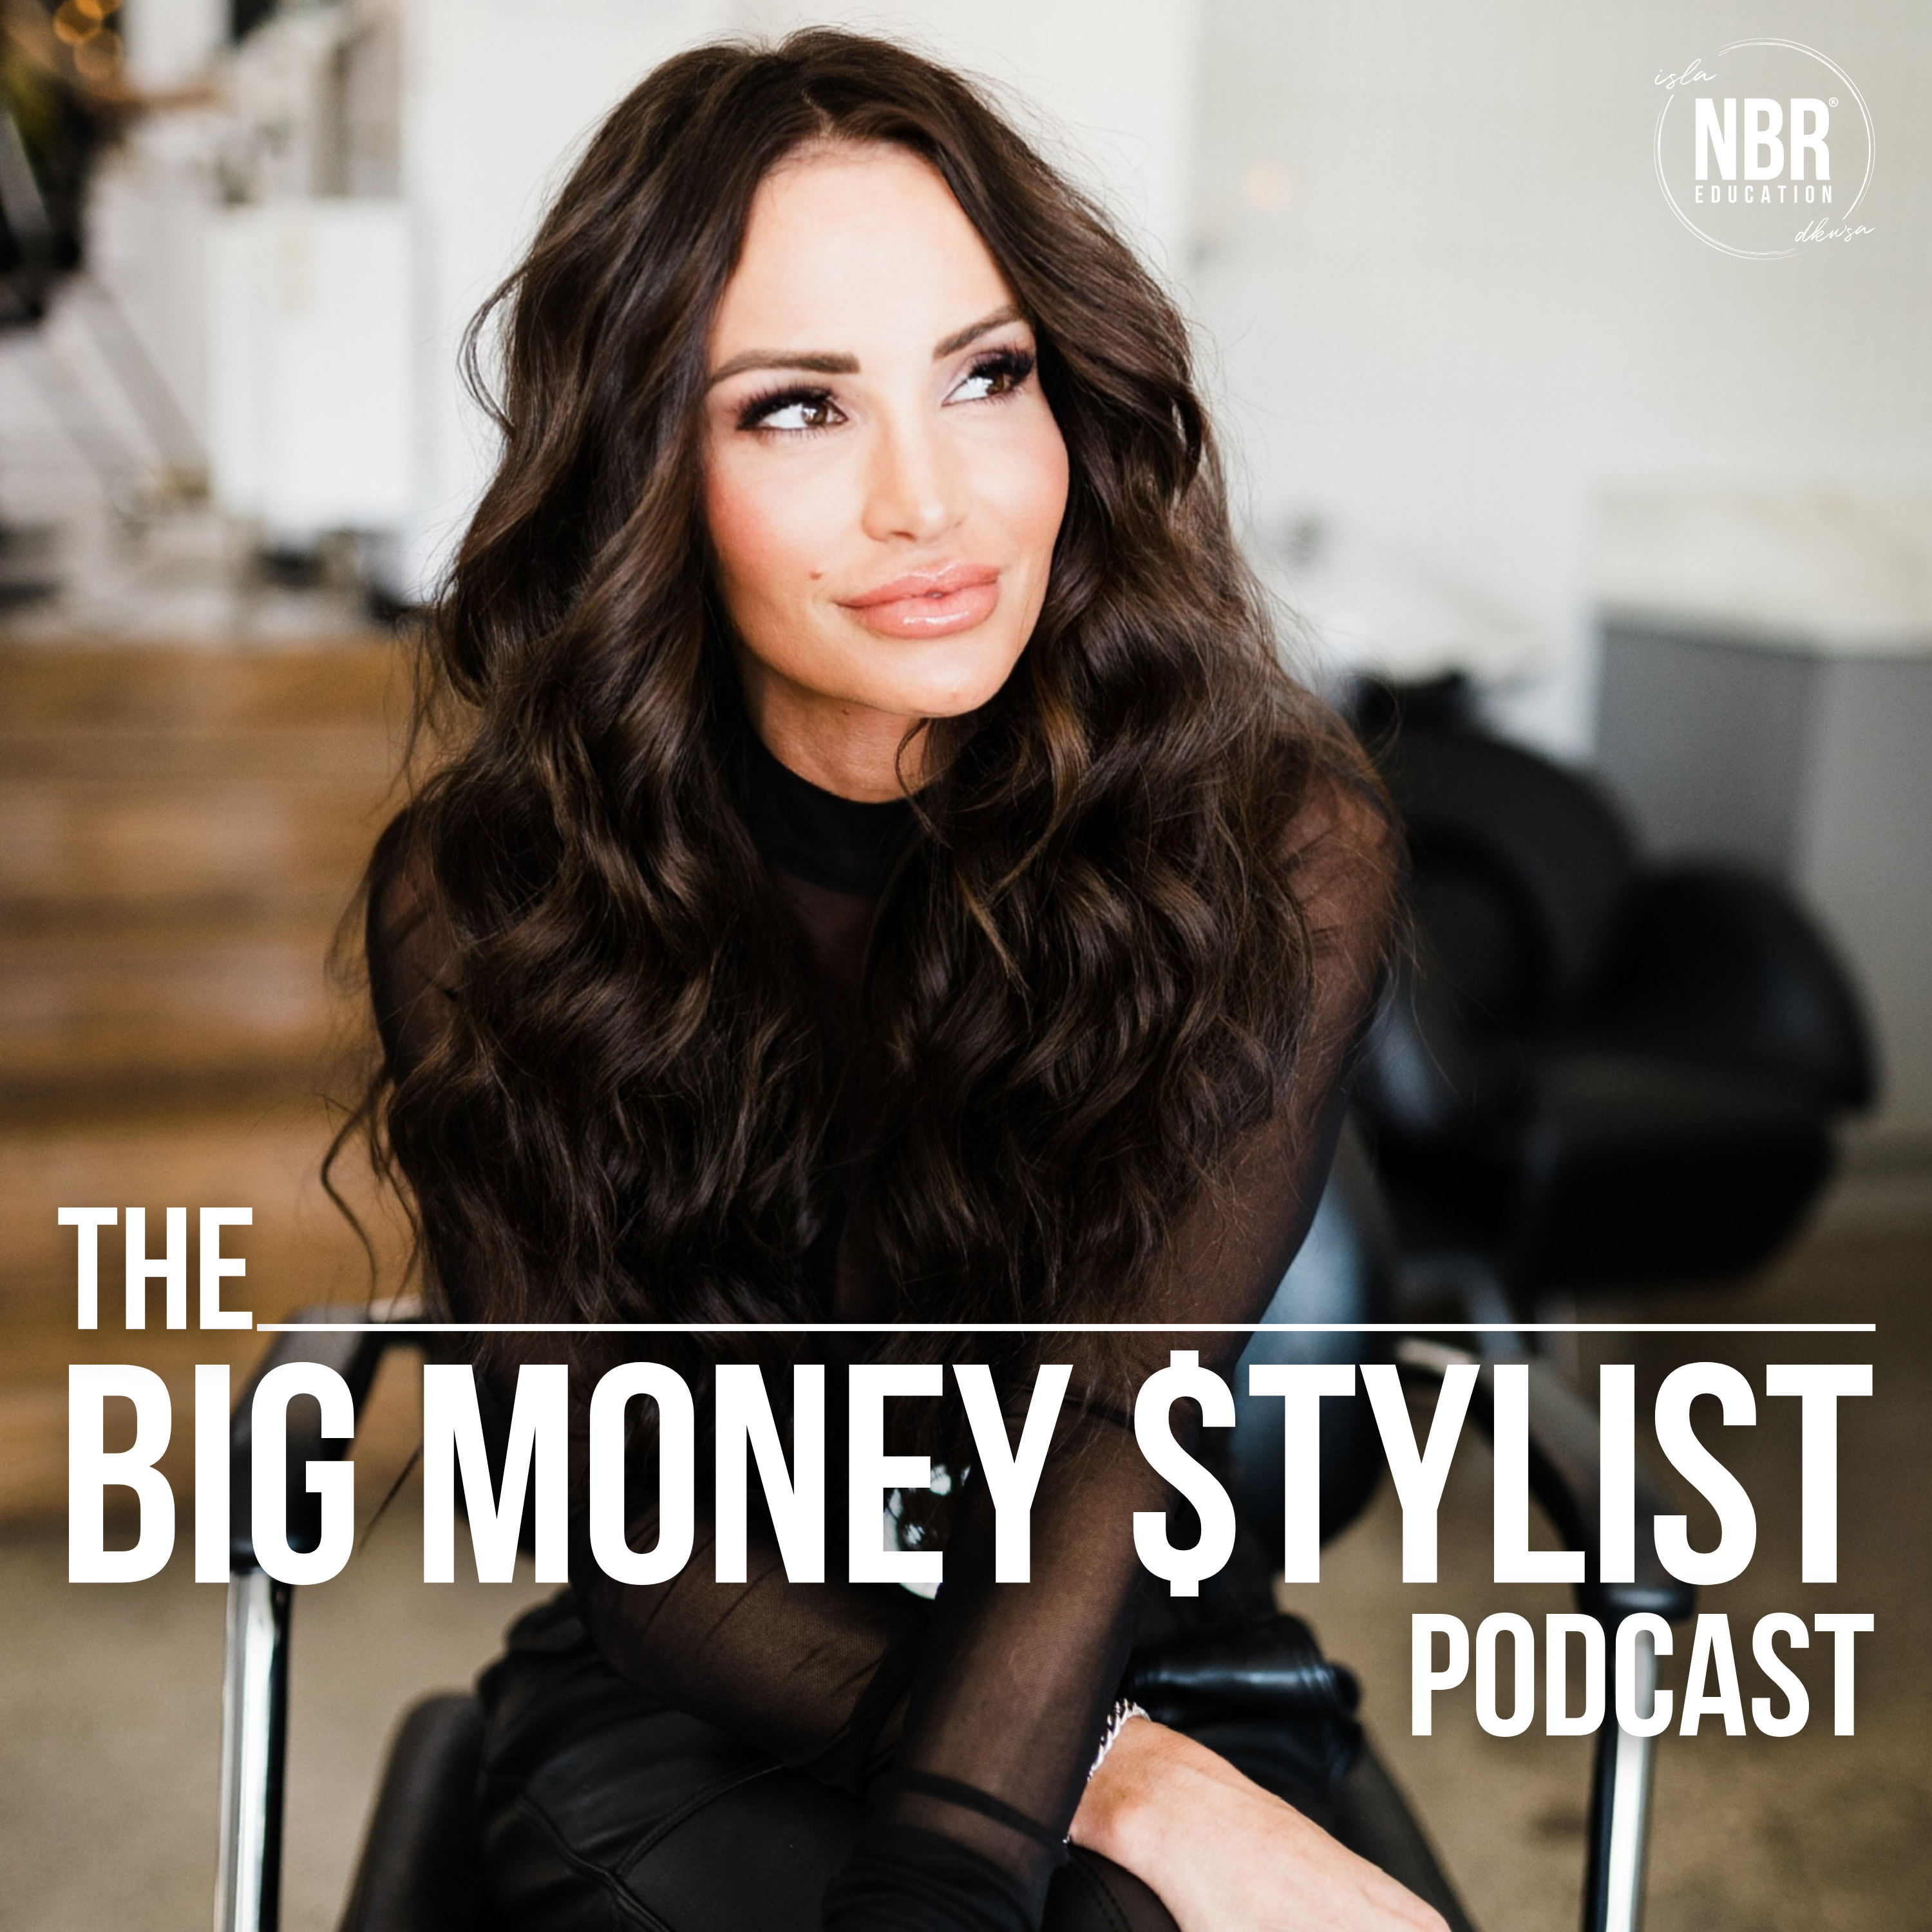 The Big Money Stylist Podcast